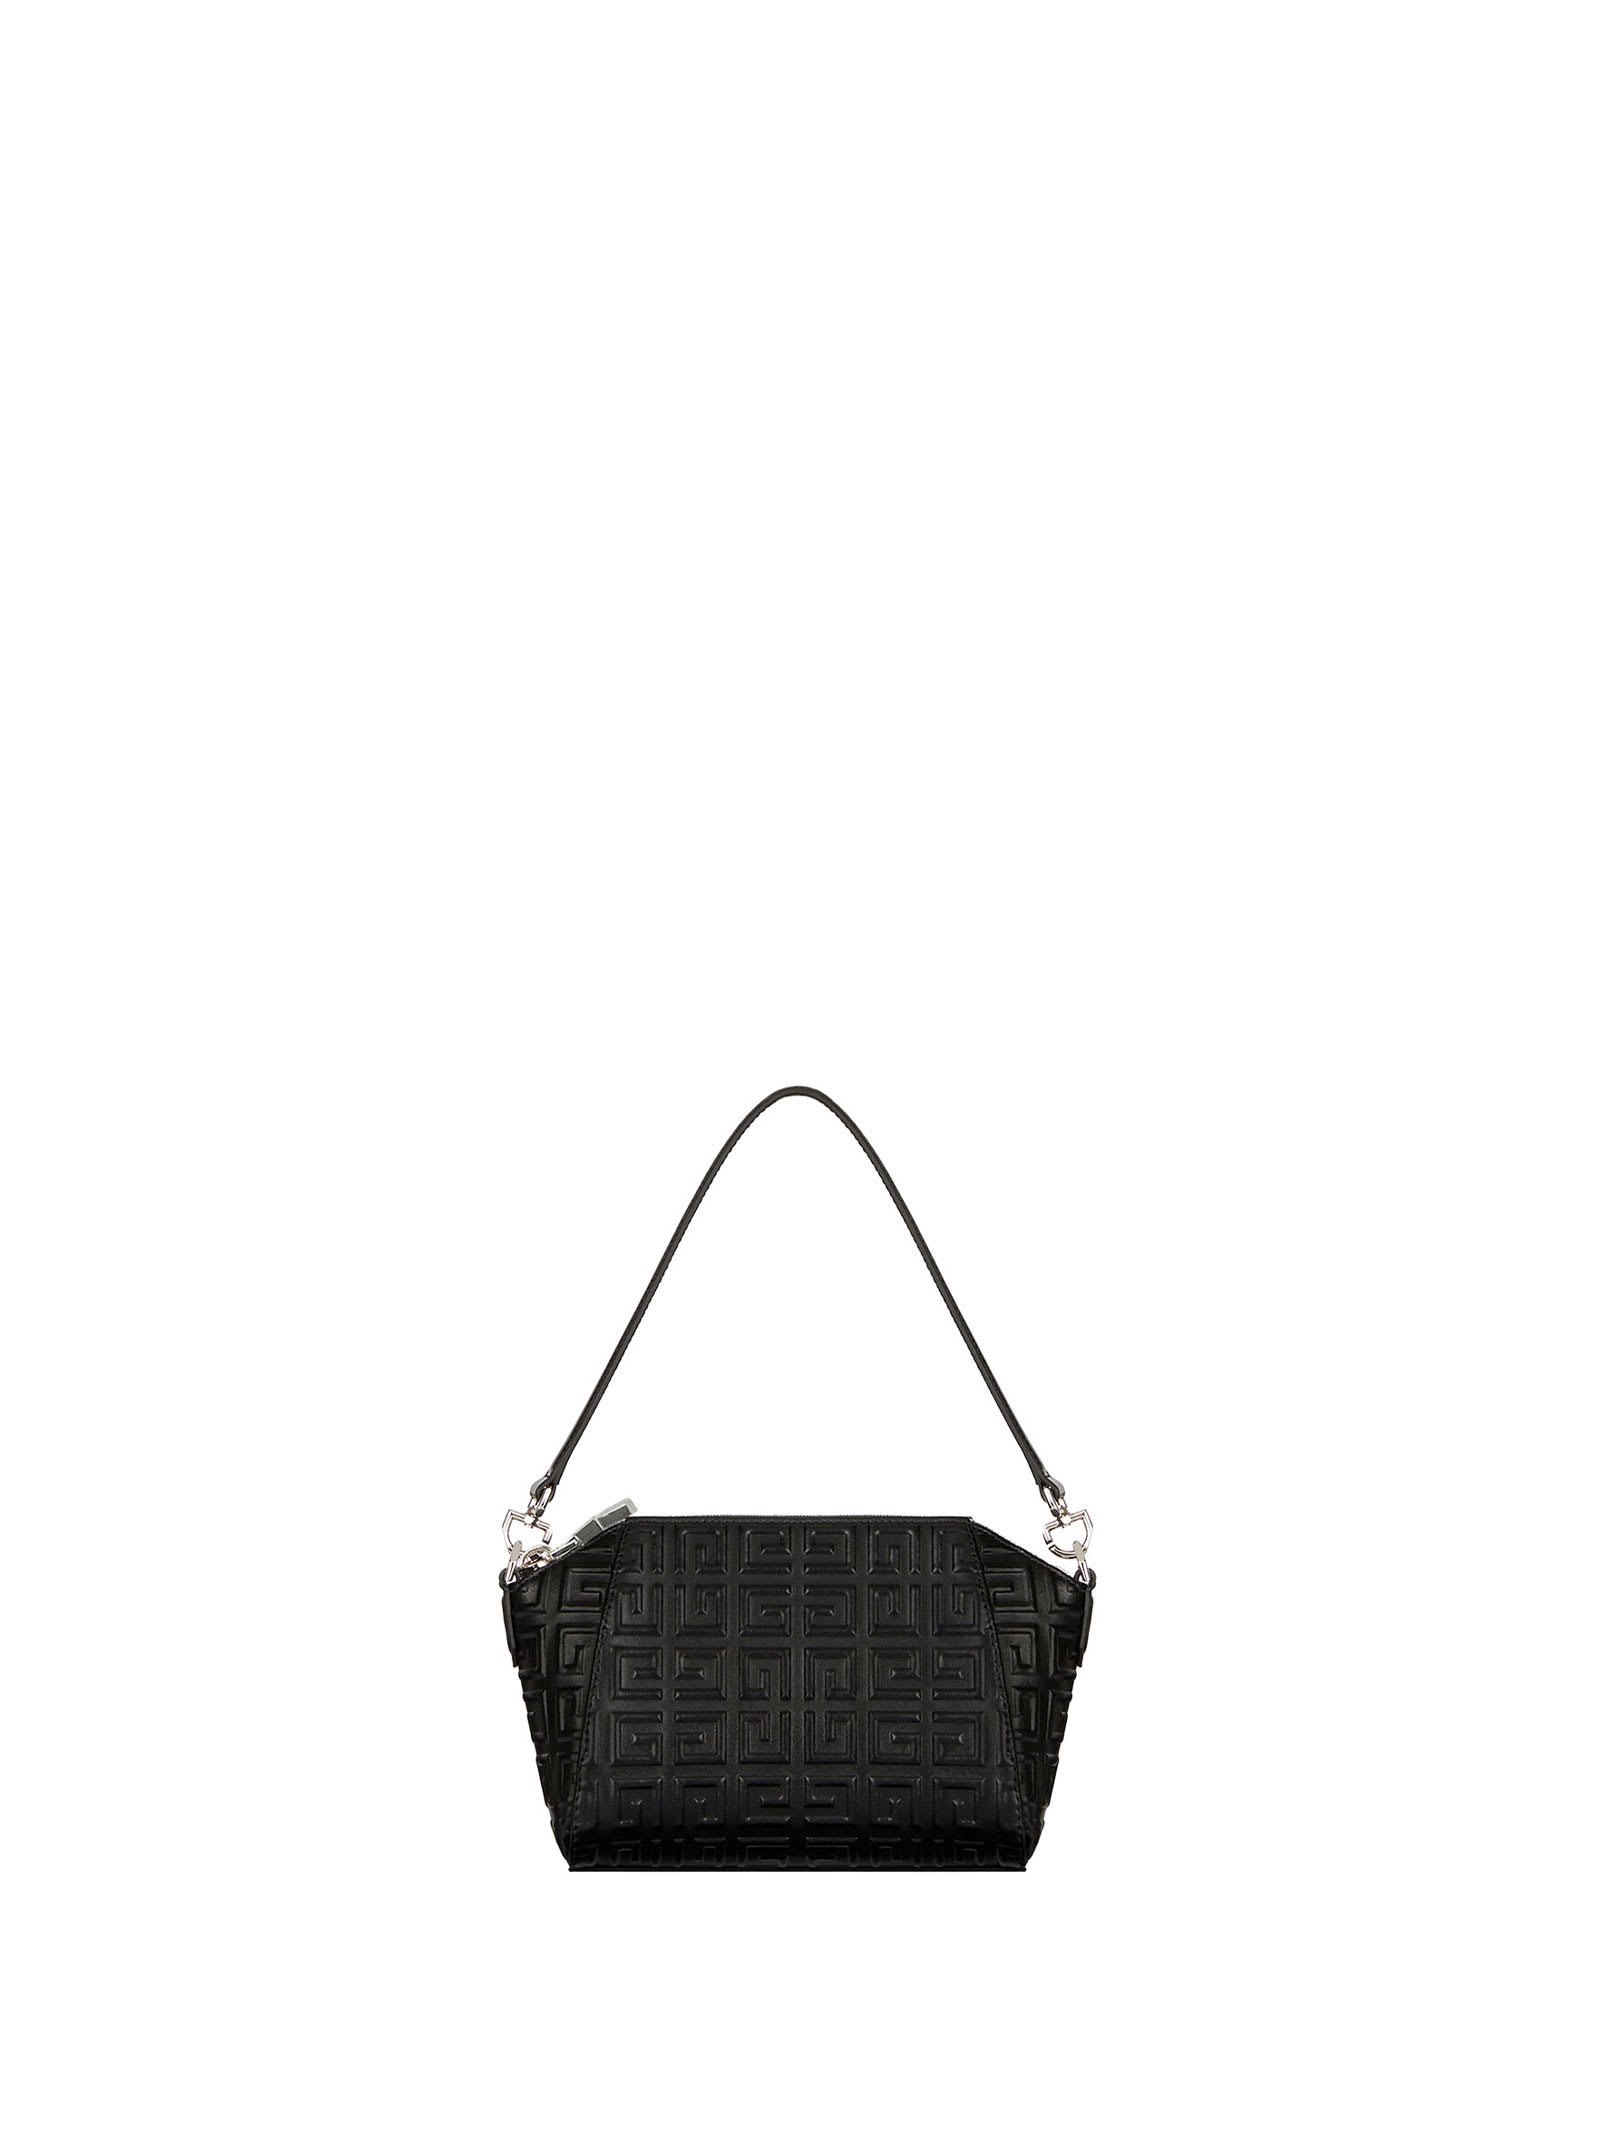 Givenchy Antigona Crossbody Bag In Black Leather